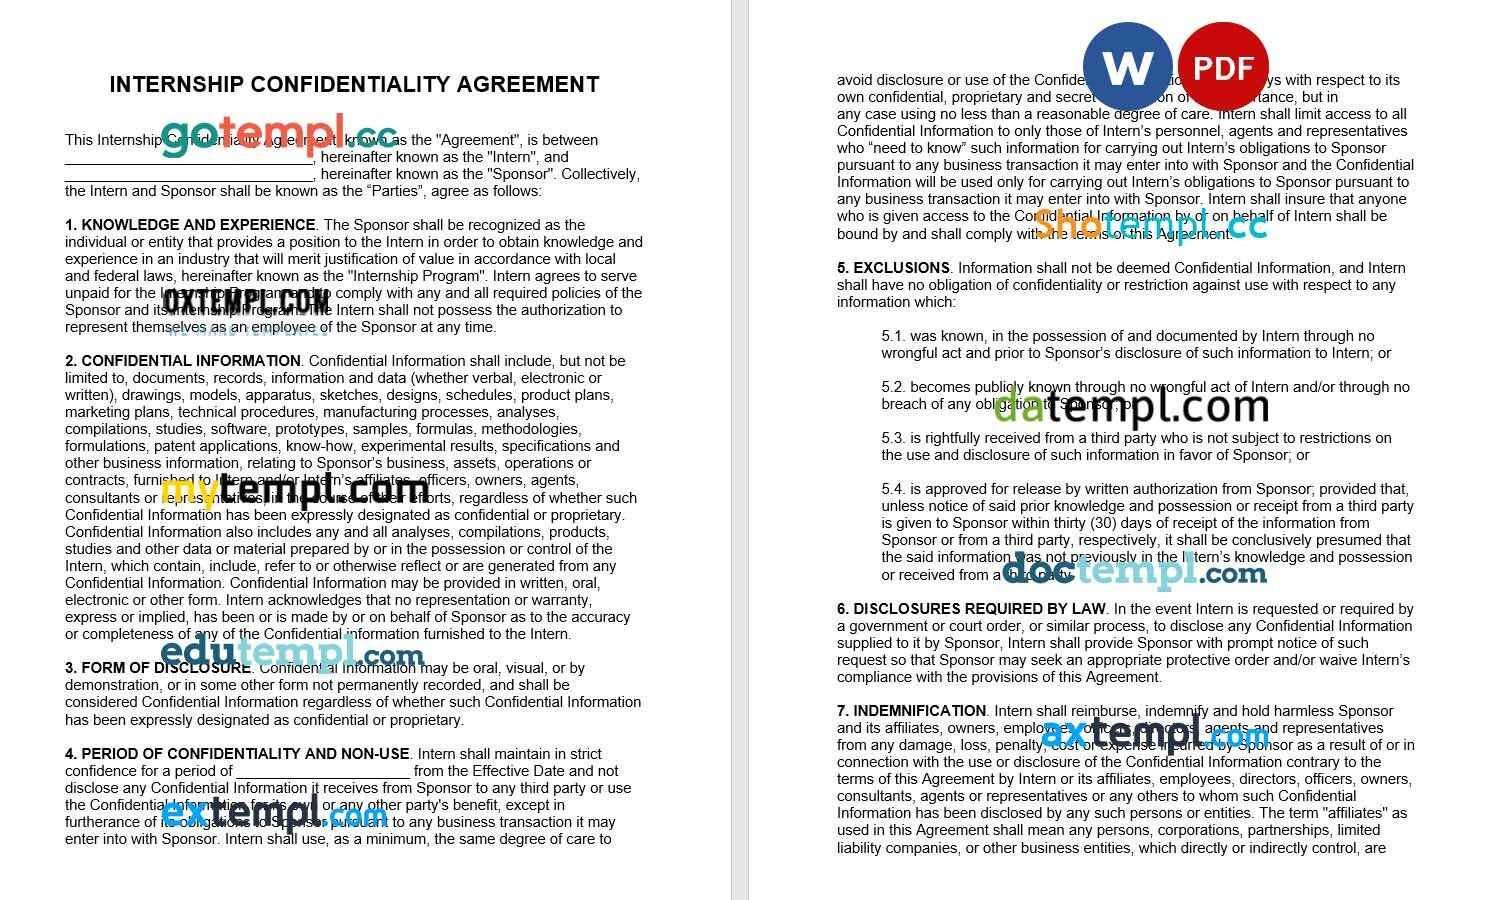 Internship Confidentiality Agreement NDA Word example, fully editable